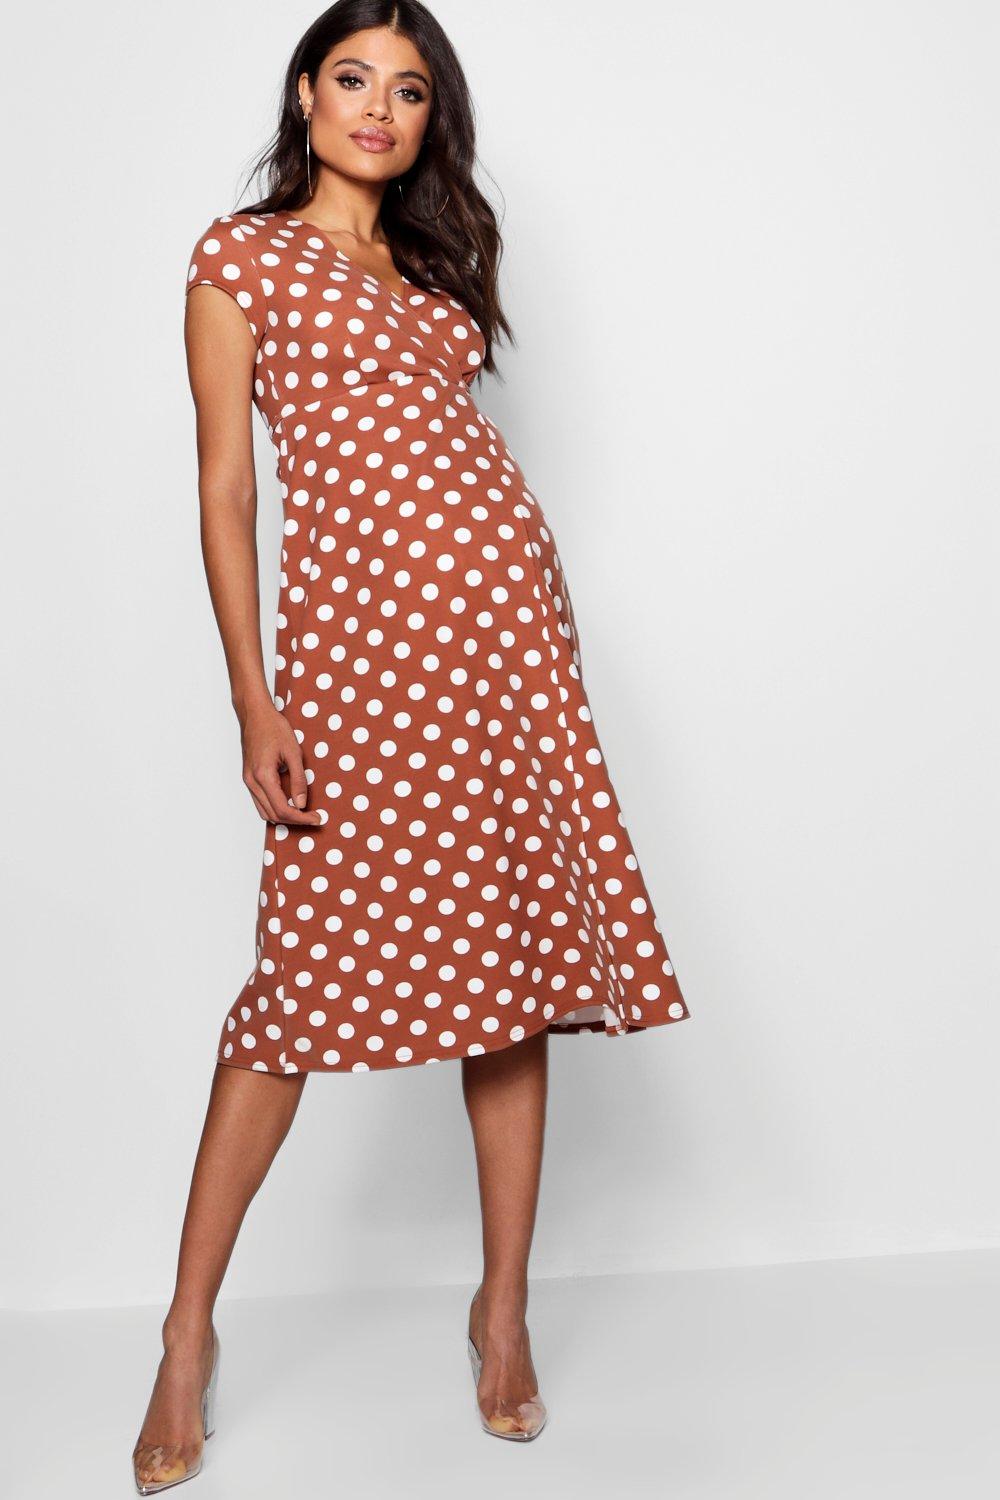 Boohoo Polka Dot Wrap Dress on Sale, 57% OFF | www.hcb.cat